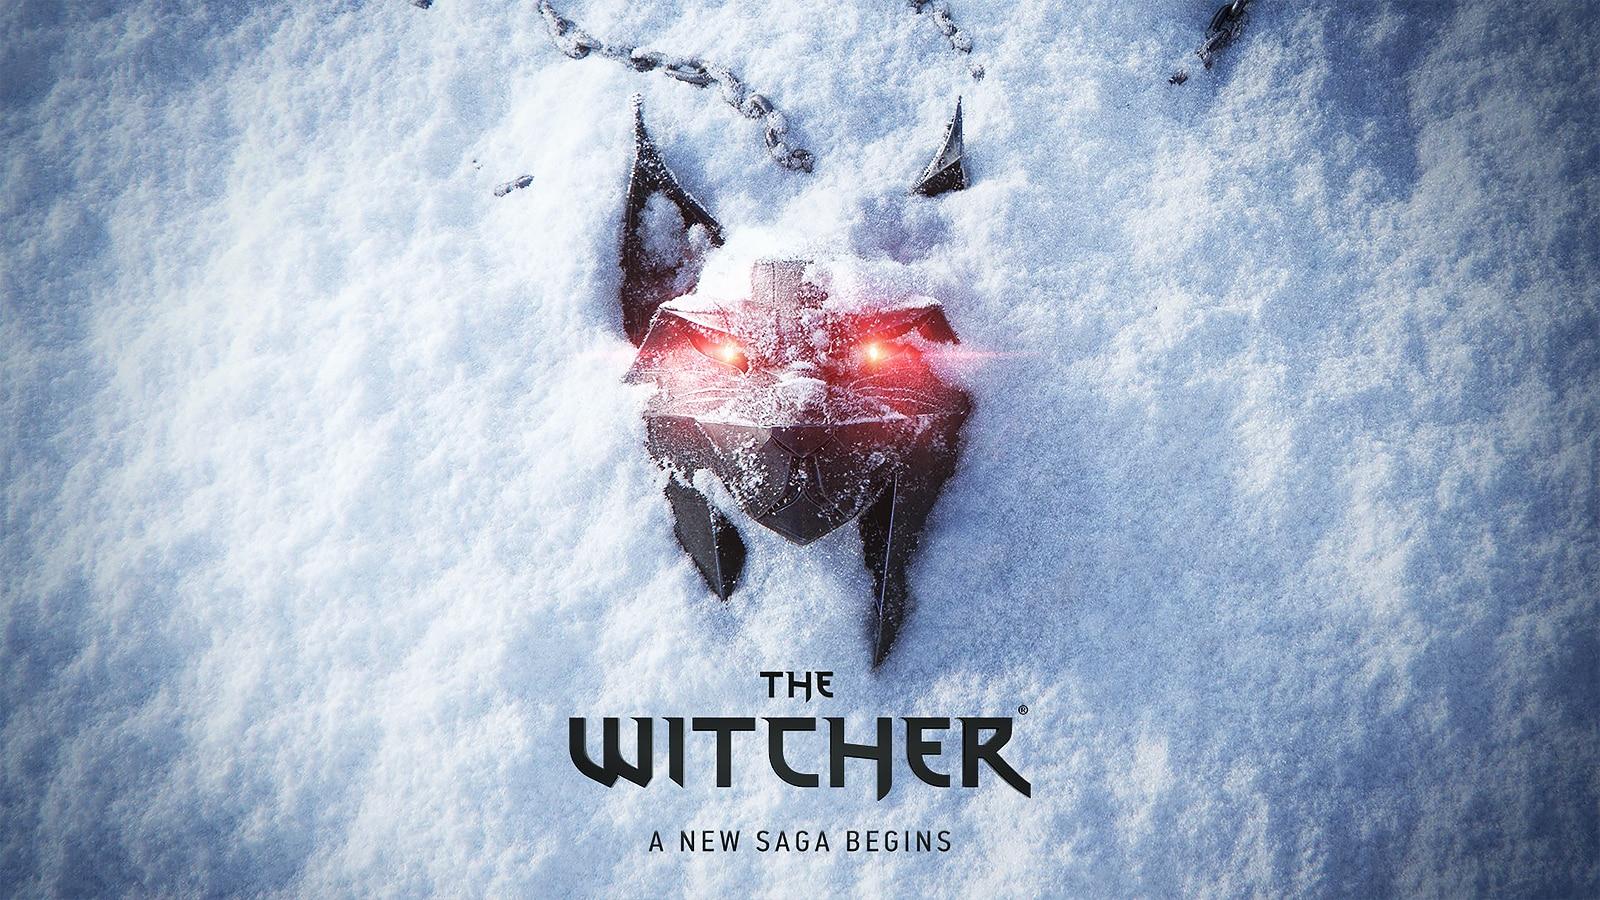 The Witcher New Saga Begins promotional artwork screenshot.